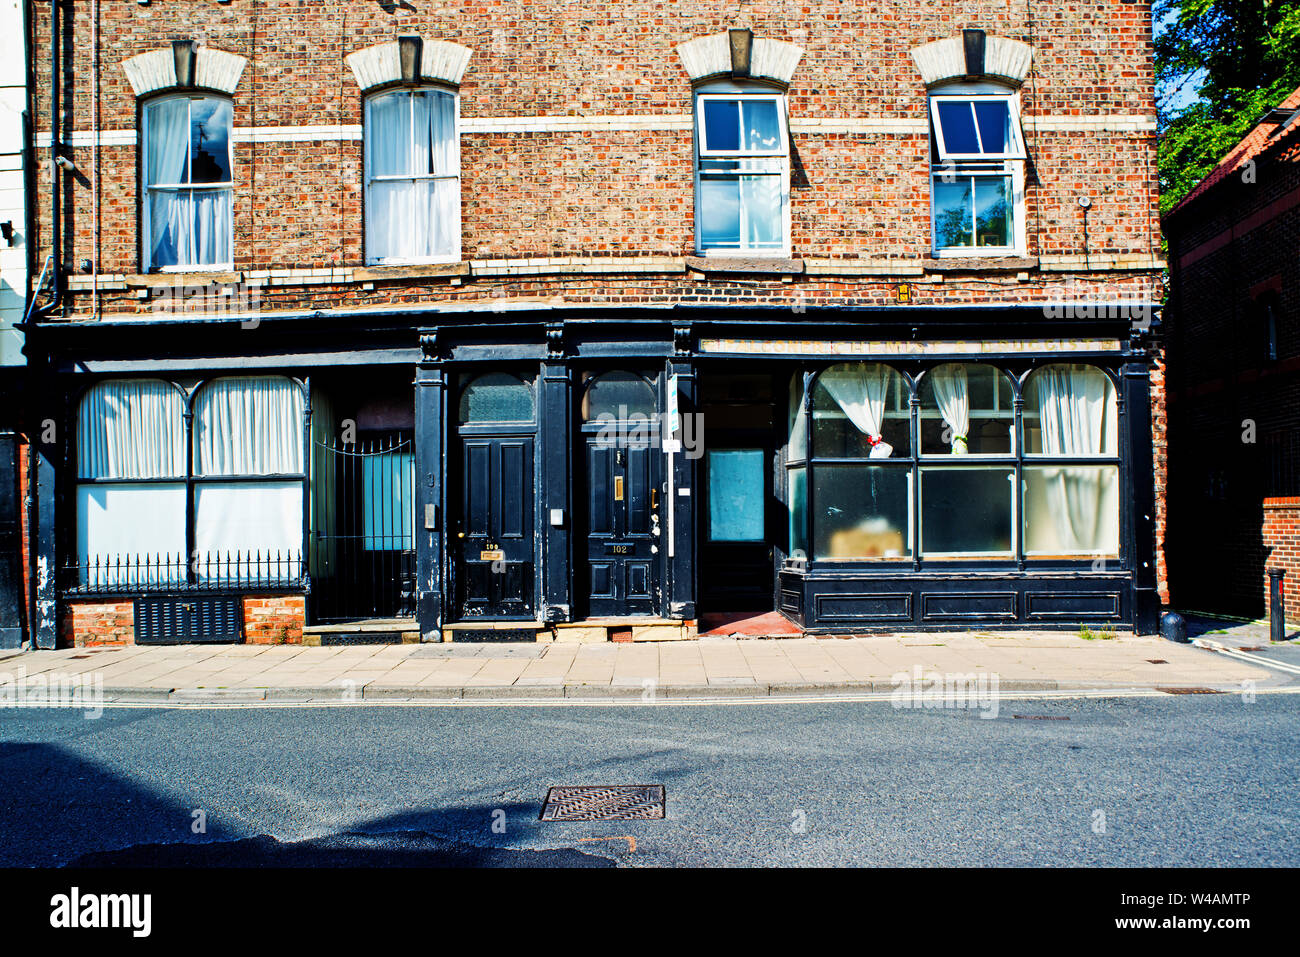 The Old Chemists Shop, Walmgate, York, England Stock Photo